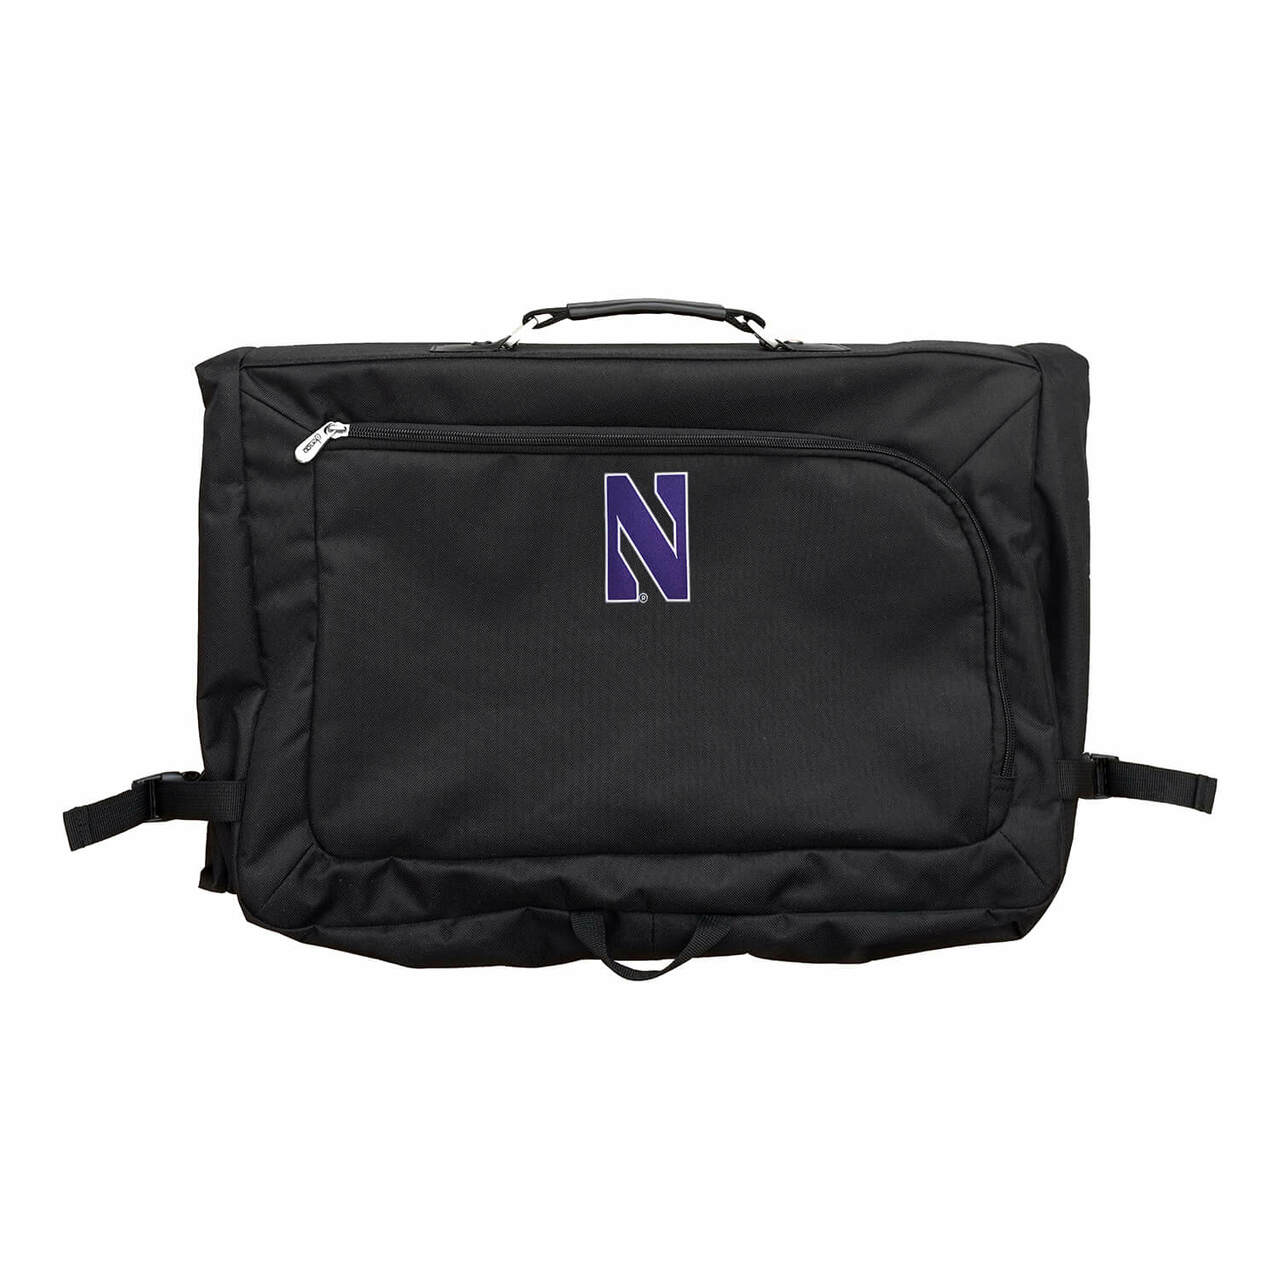 Northwestern 18" Carry On Garment Bag